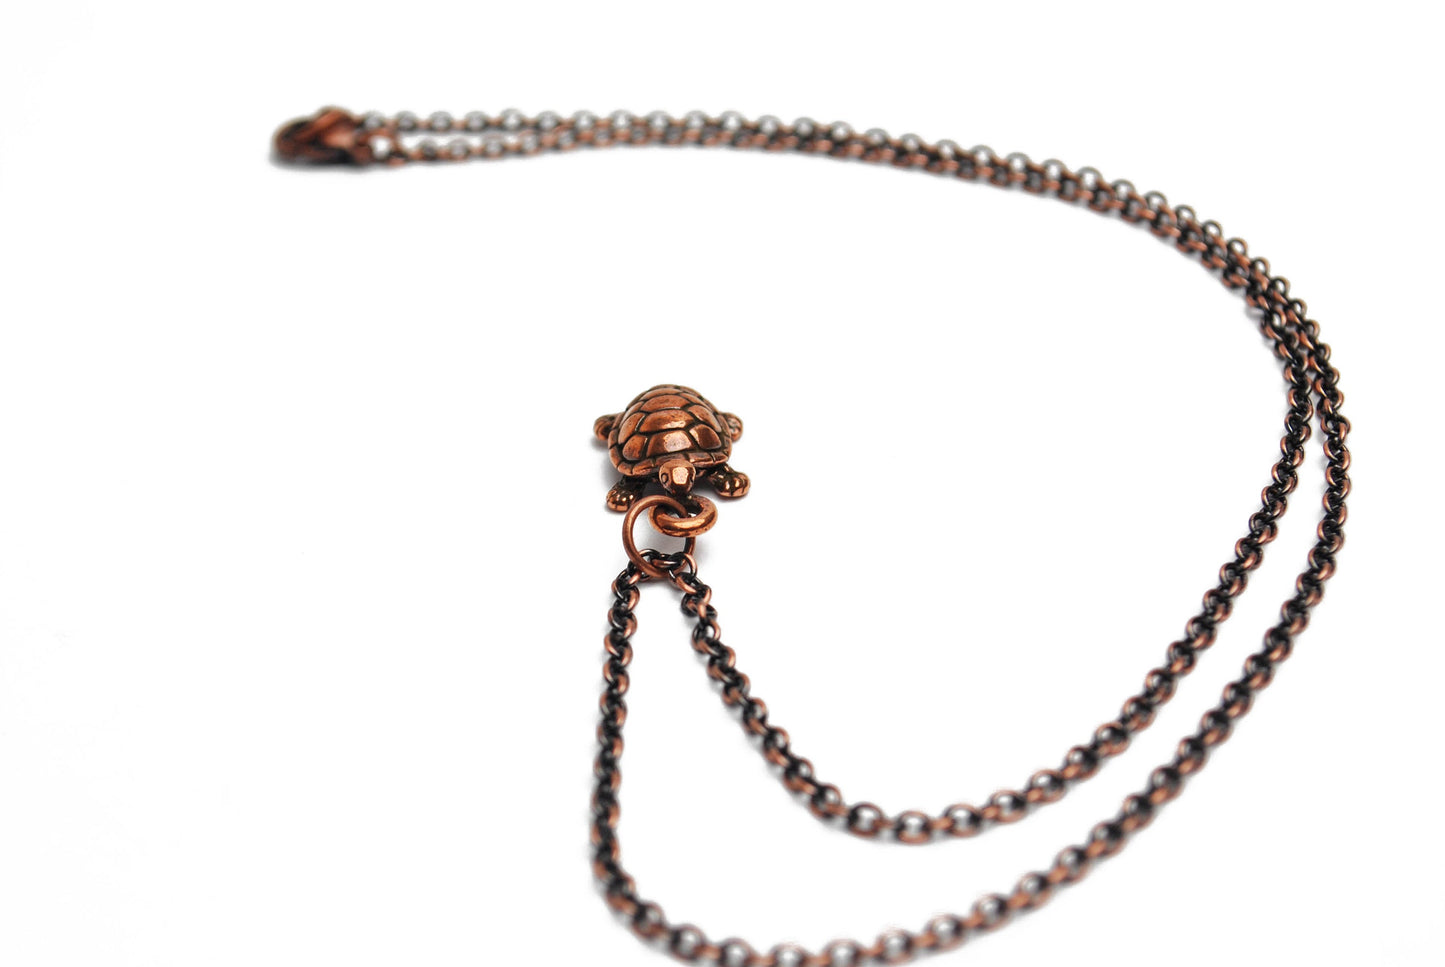 Turtle Necklace in Antique Copper